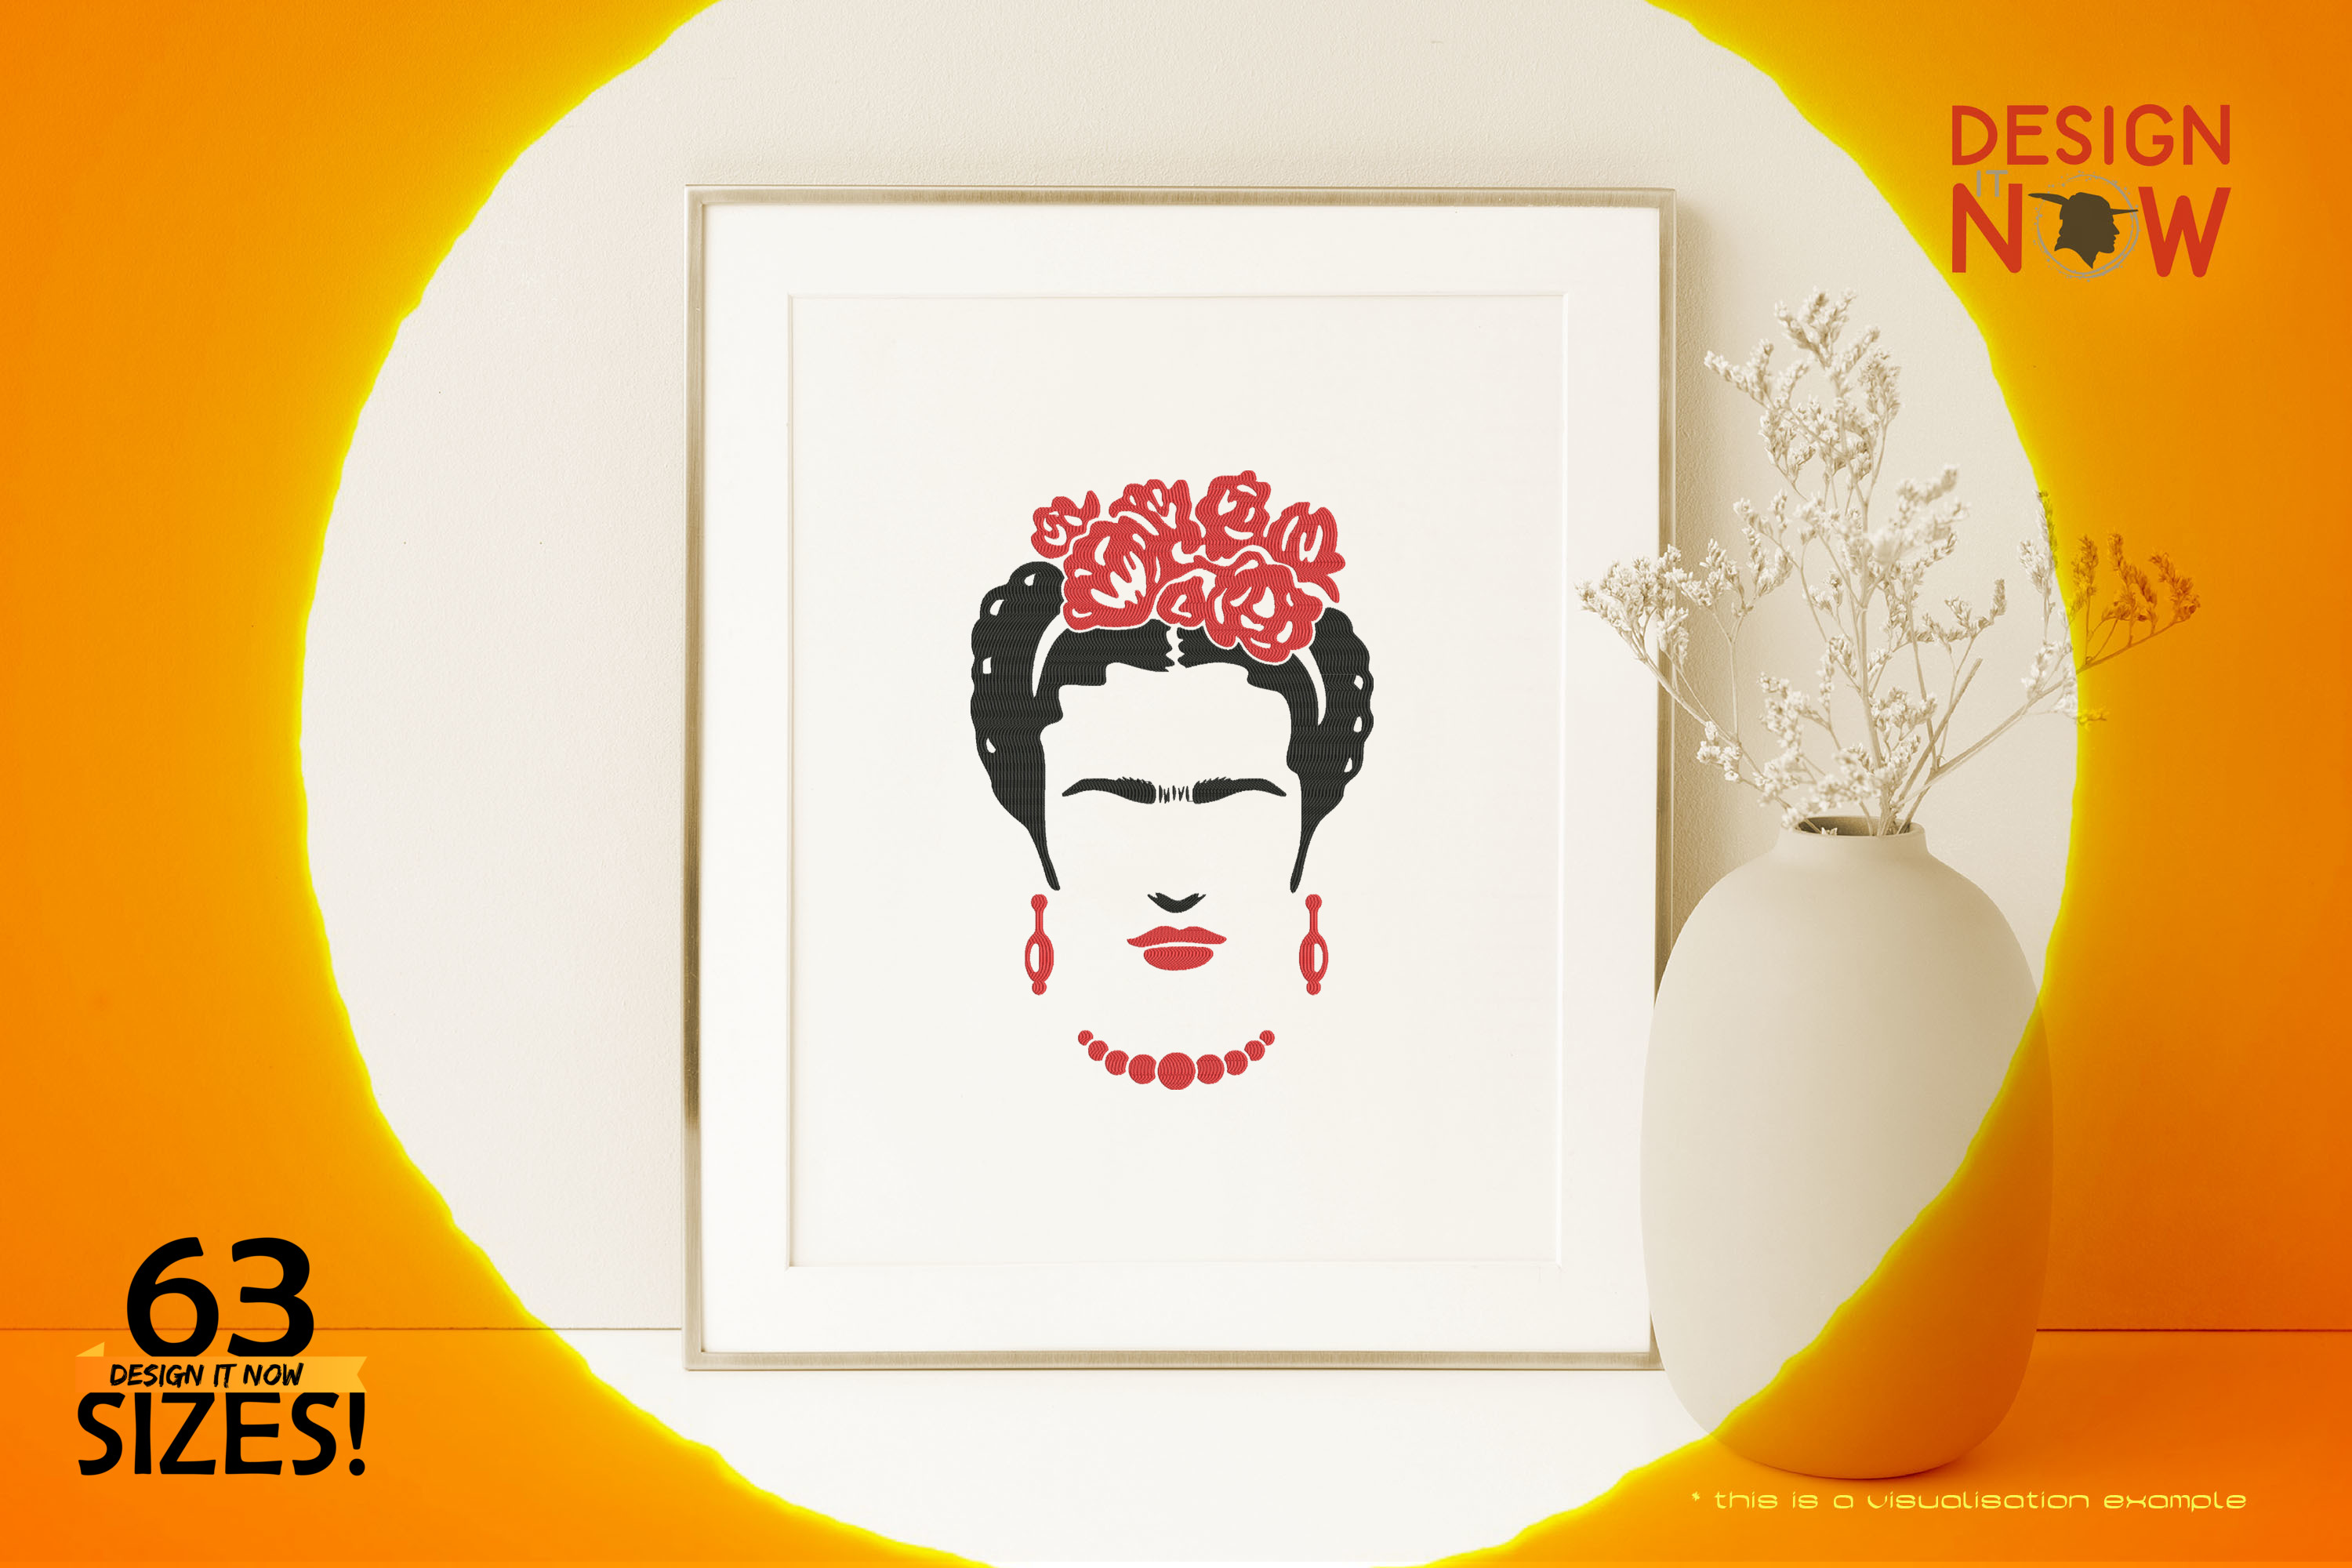 Tribute To Artist Magdalena Carmen Frieda Kahlo Y Calderon aka Frida Kahlo (Flowers)